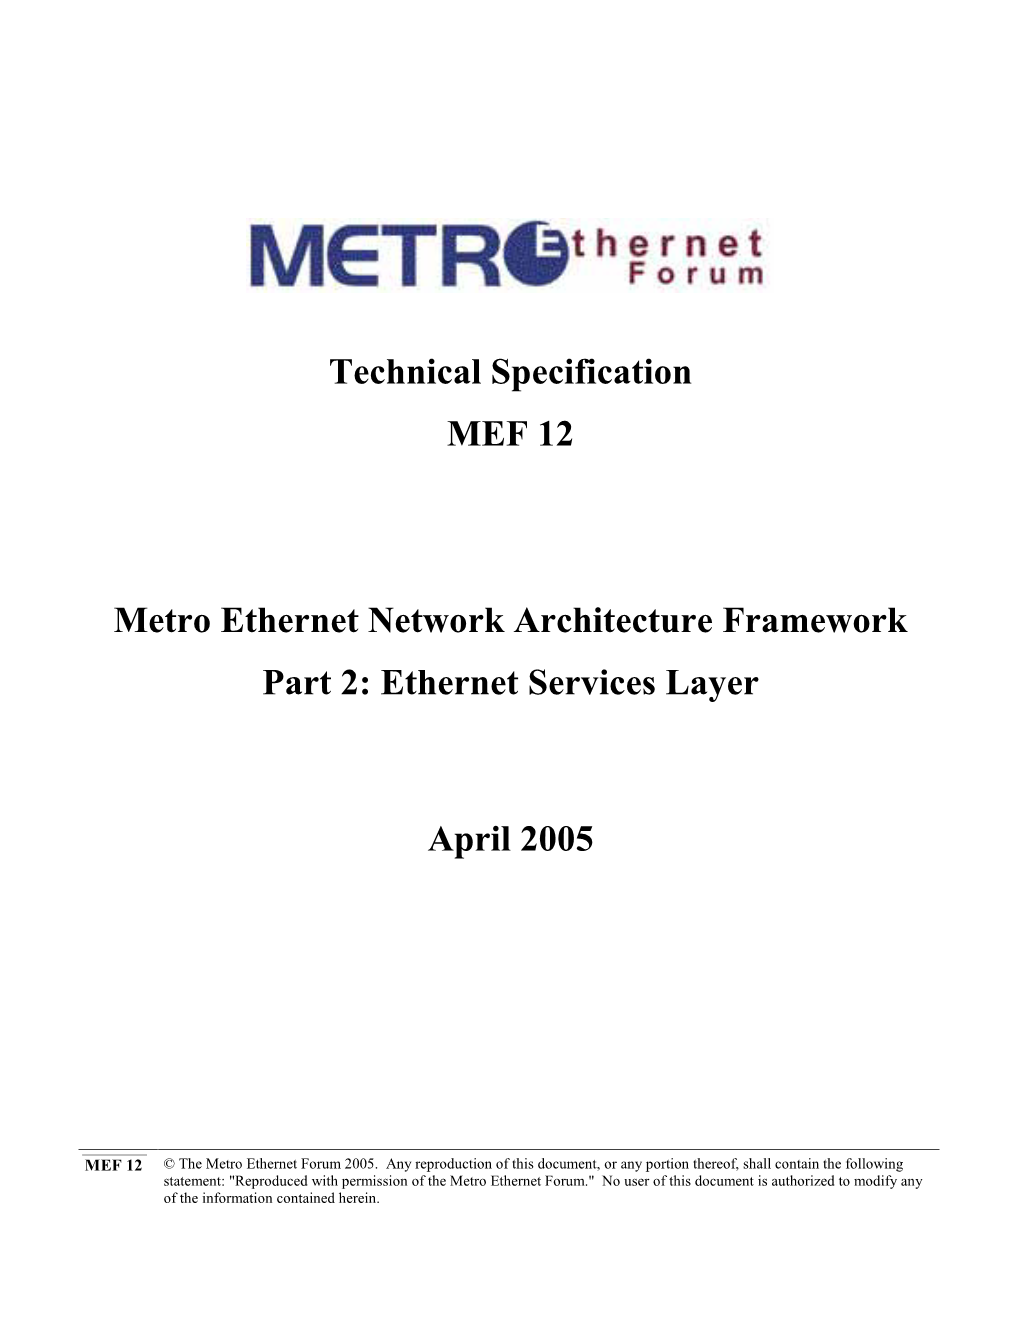 MEF 12: MEN Architecture Framework